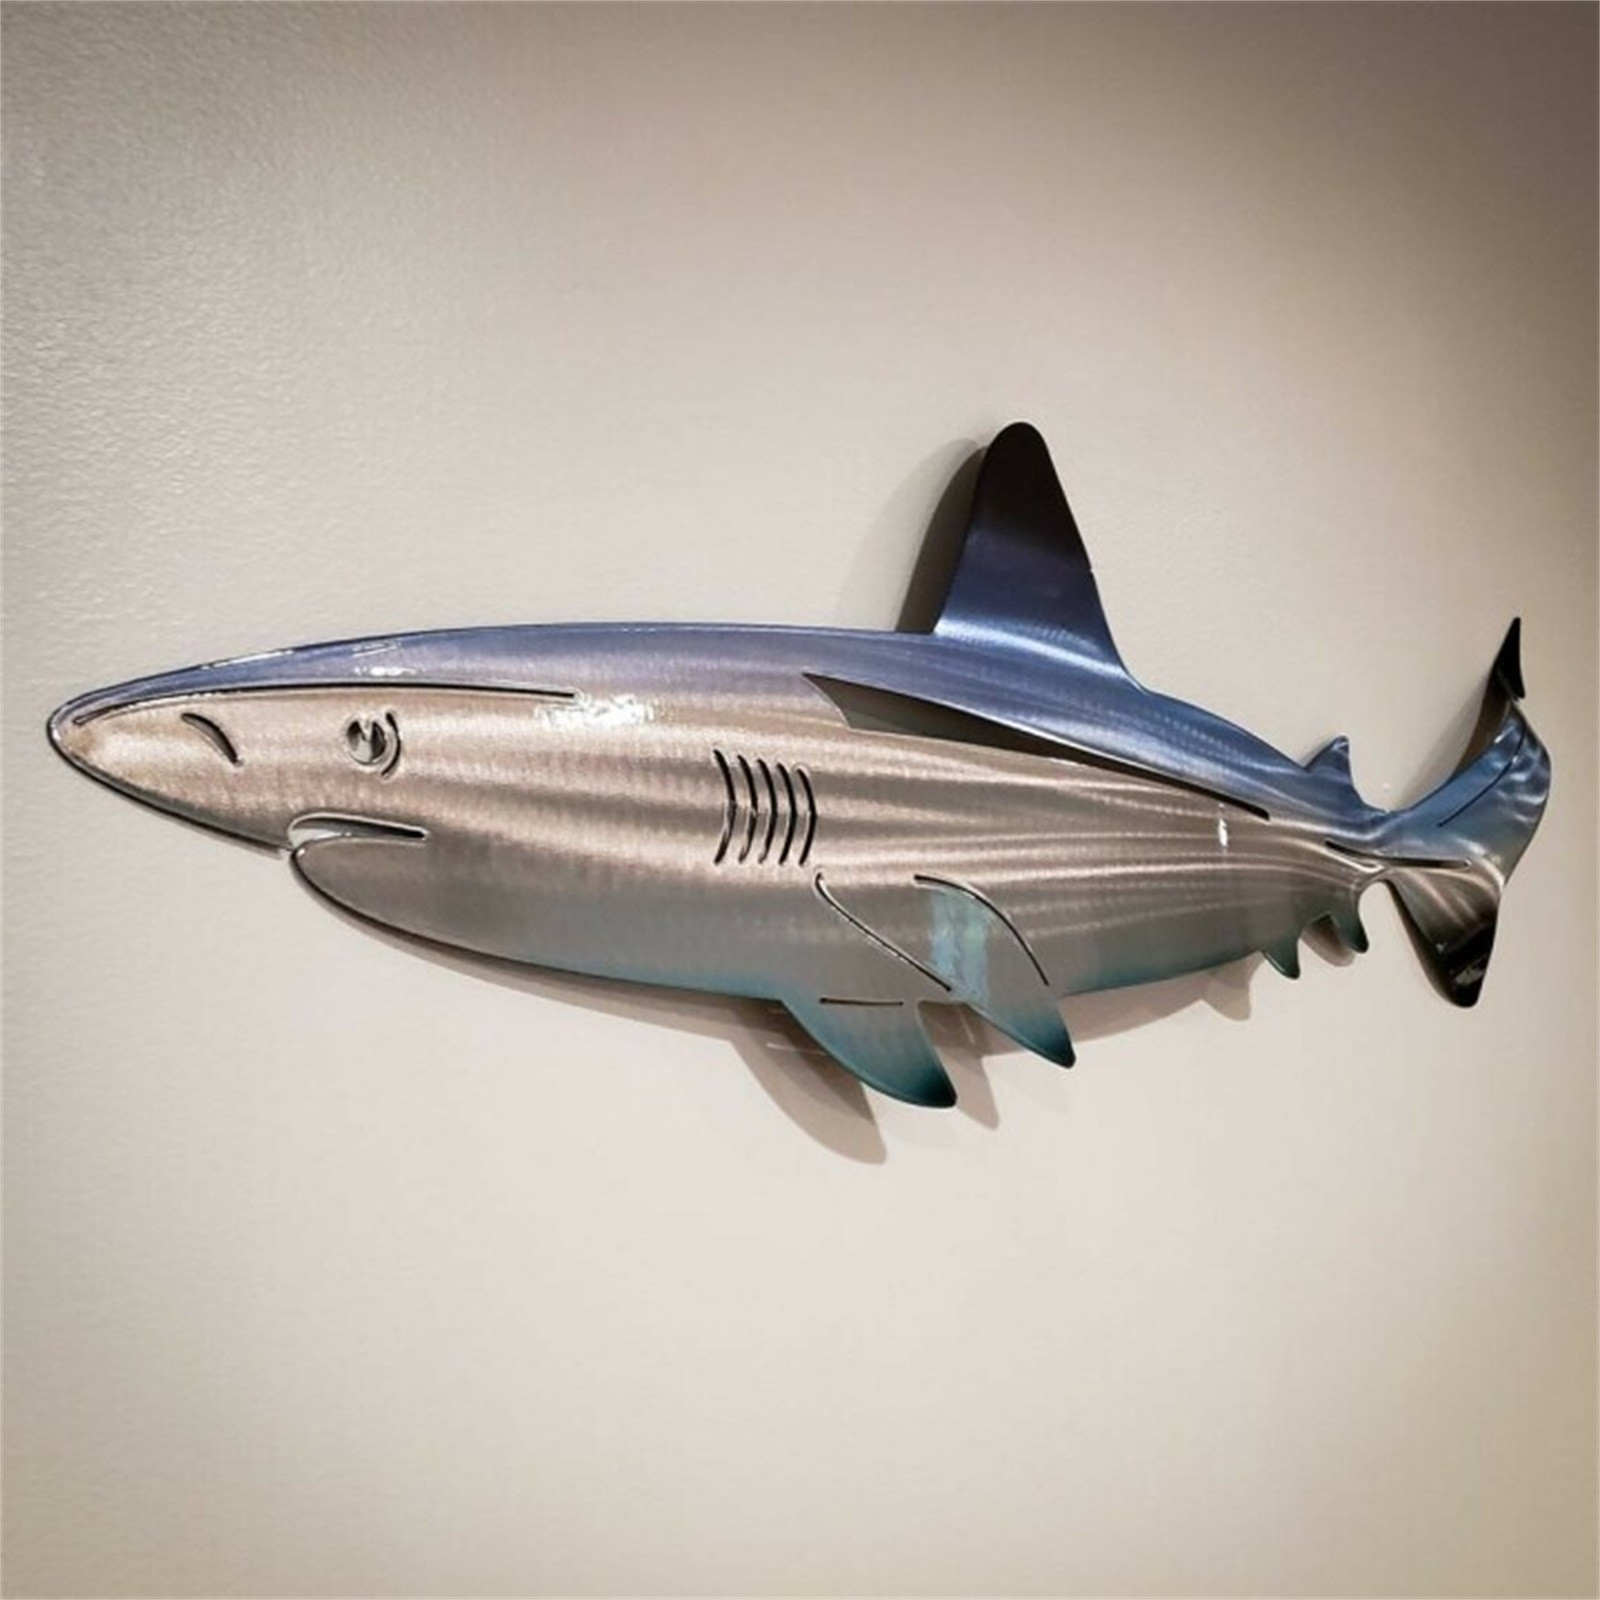 Metal Shark Outdoor Wall Art Hanging Sculpture for Living Room,Bedroom,Home Decor - image 5 of 6